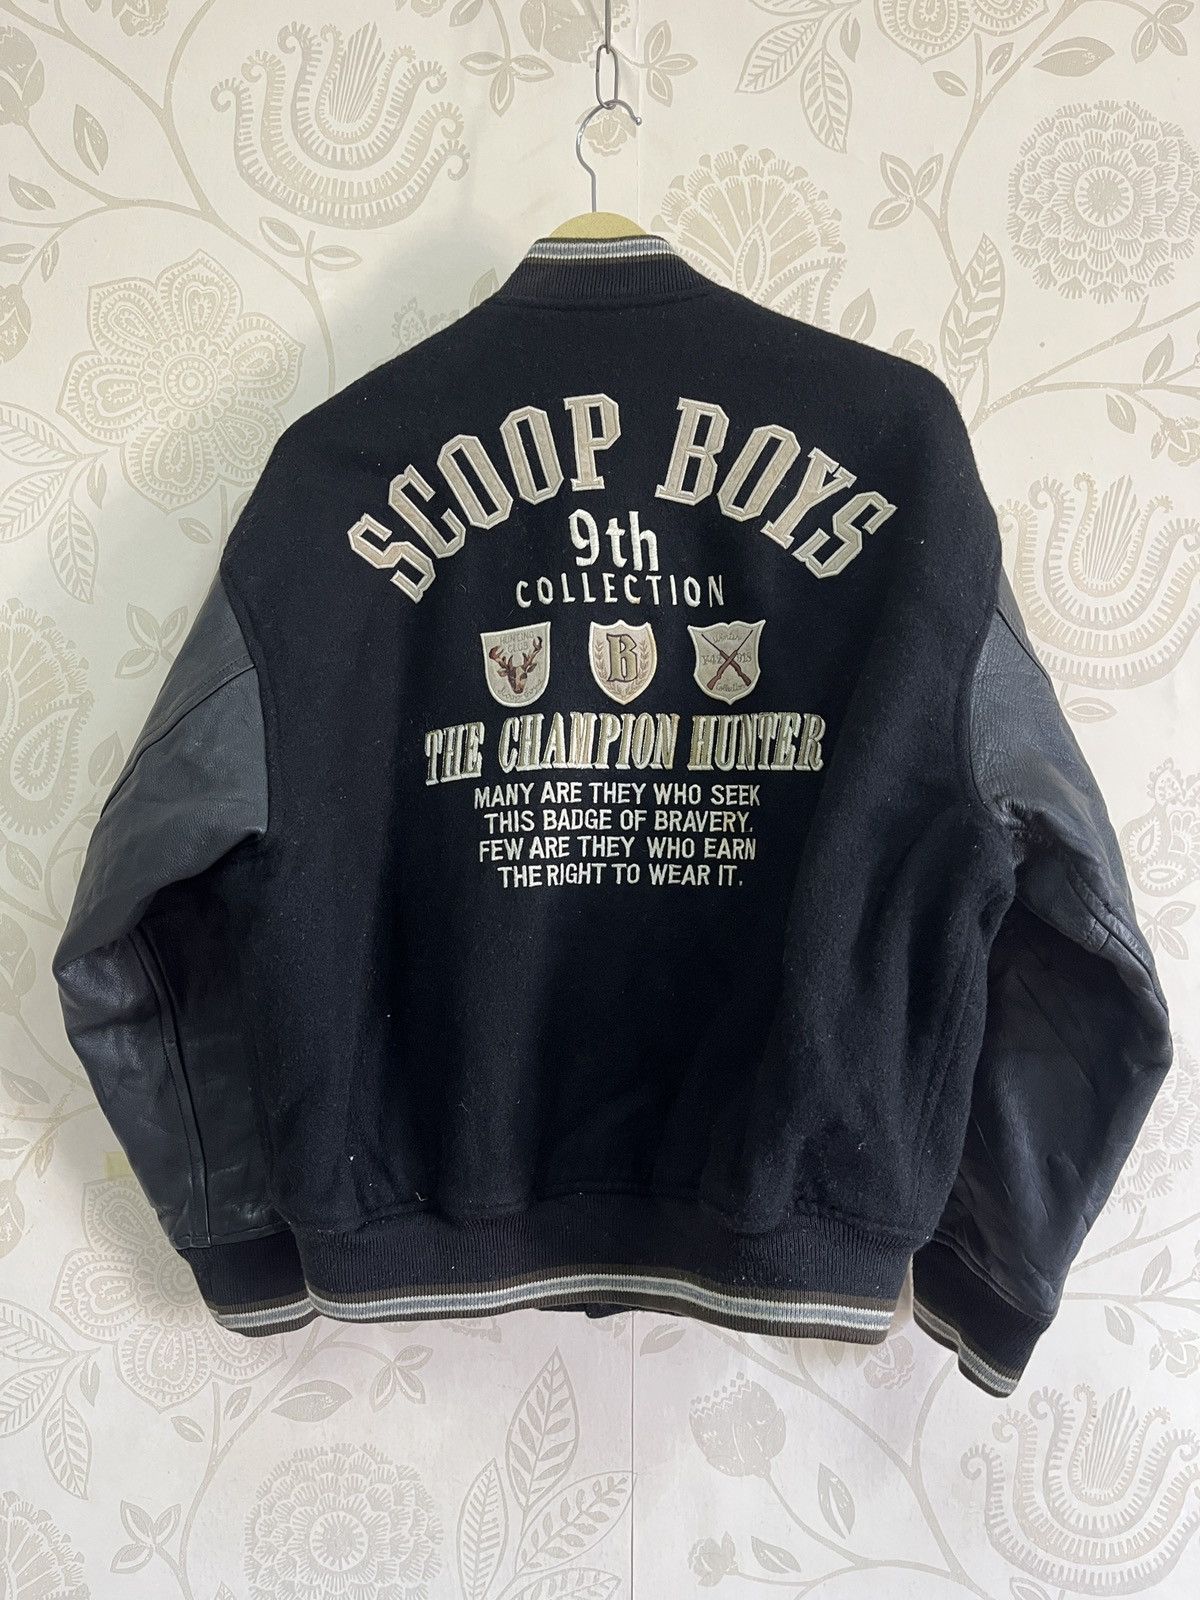 Leather - Vintage Scoop Boys The Champion Hunters Varsity - 1